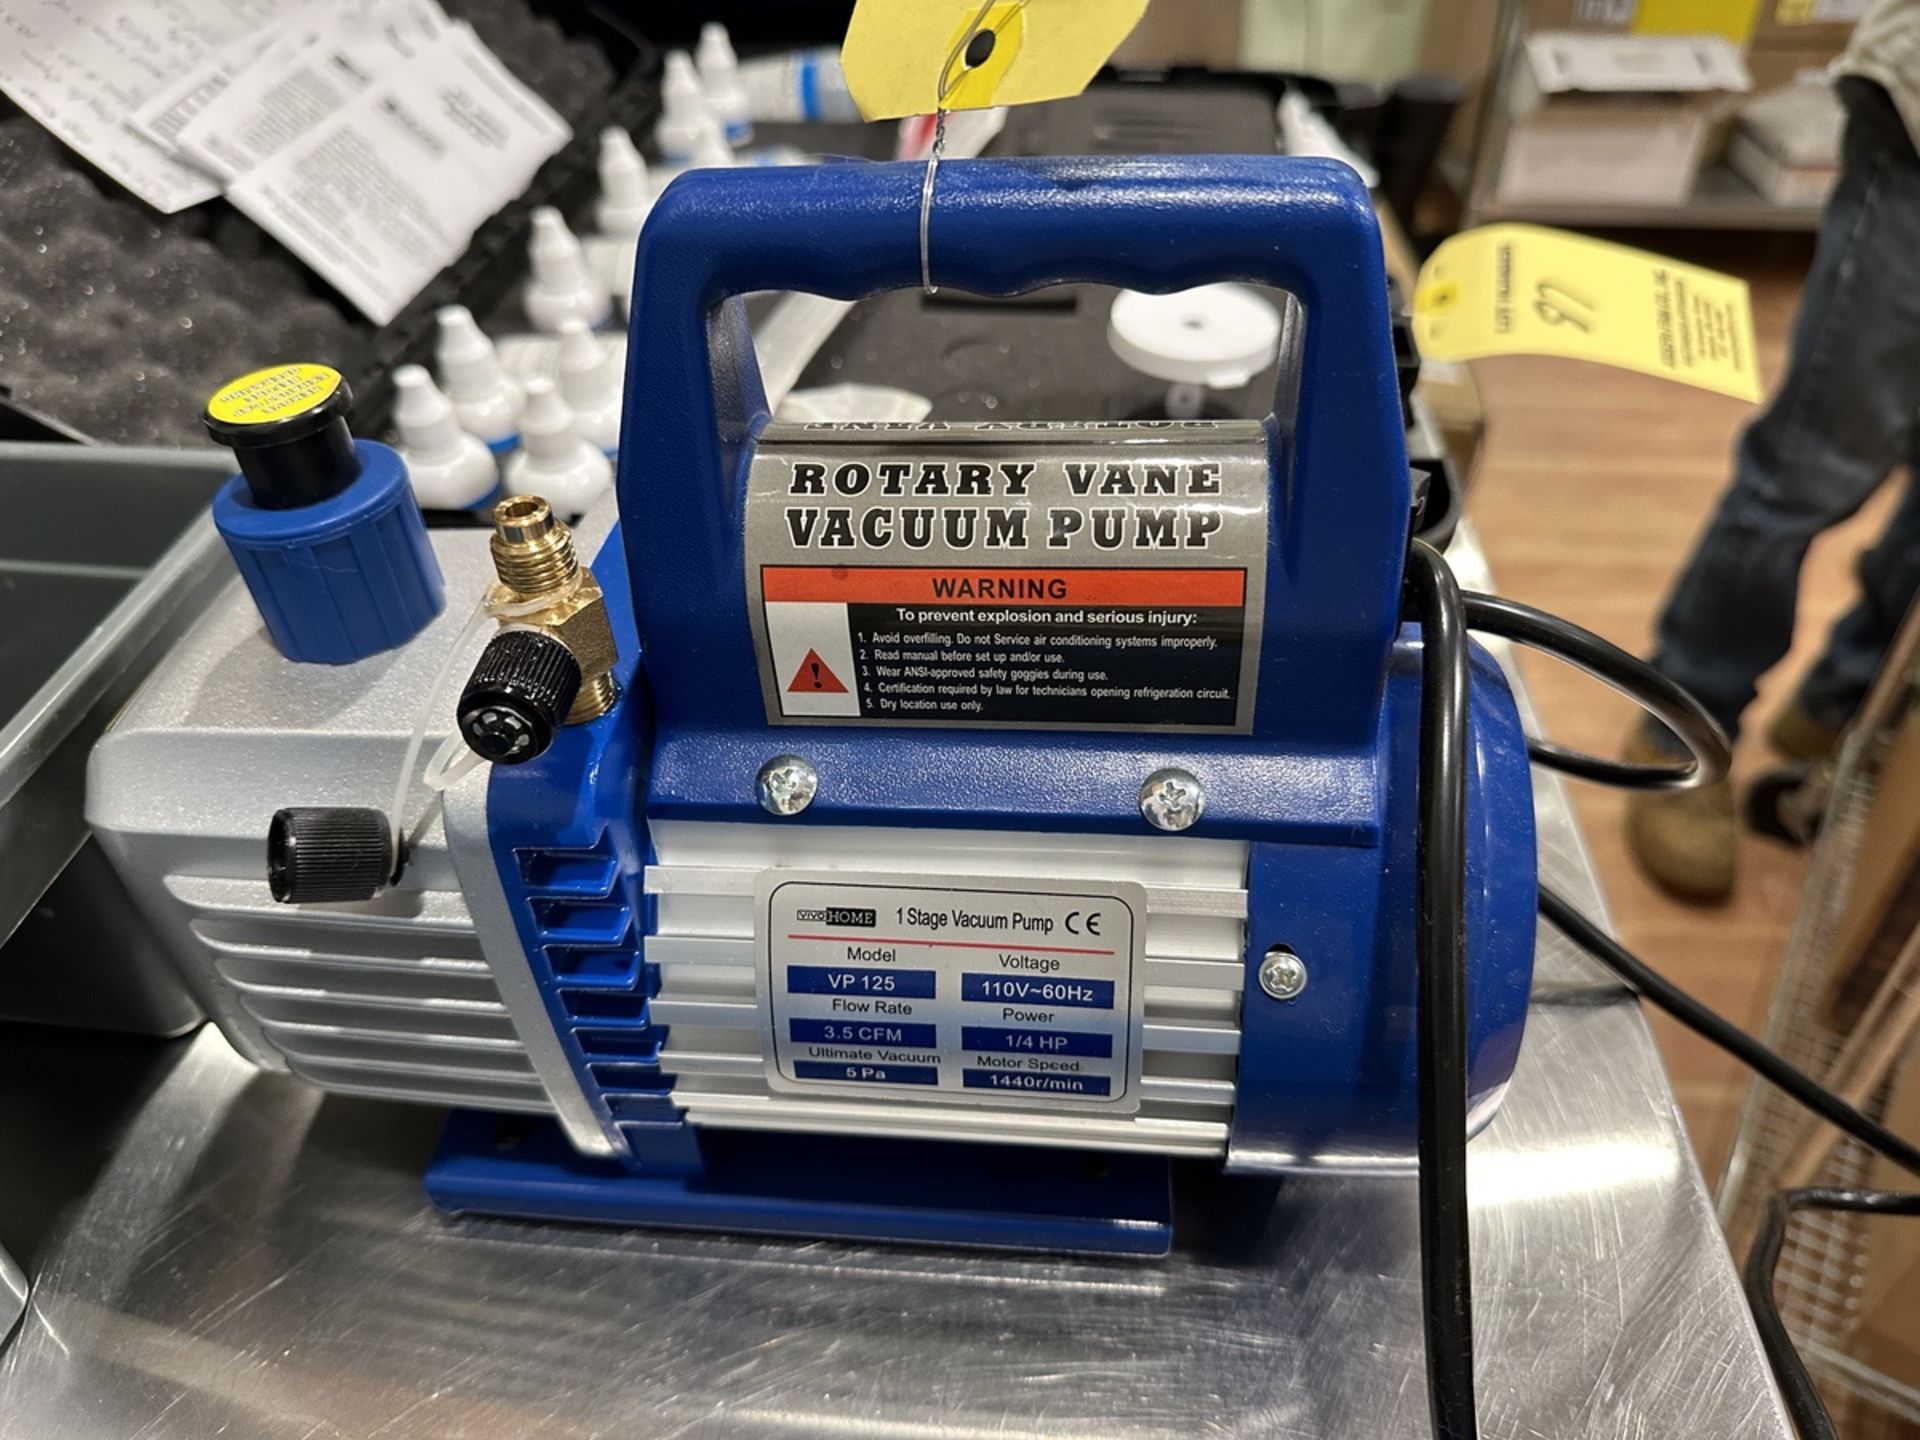 Rotsry Vane Vacuum Pump